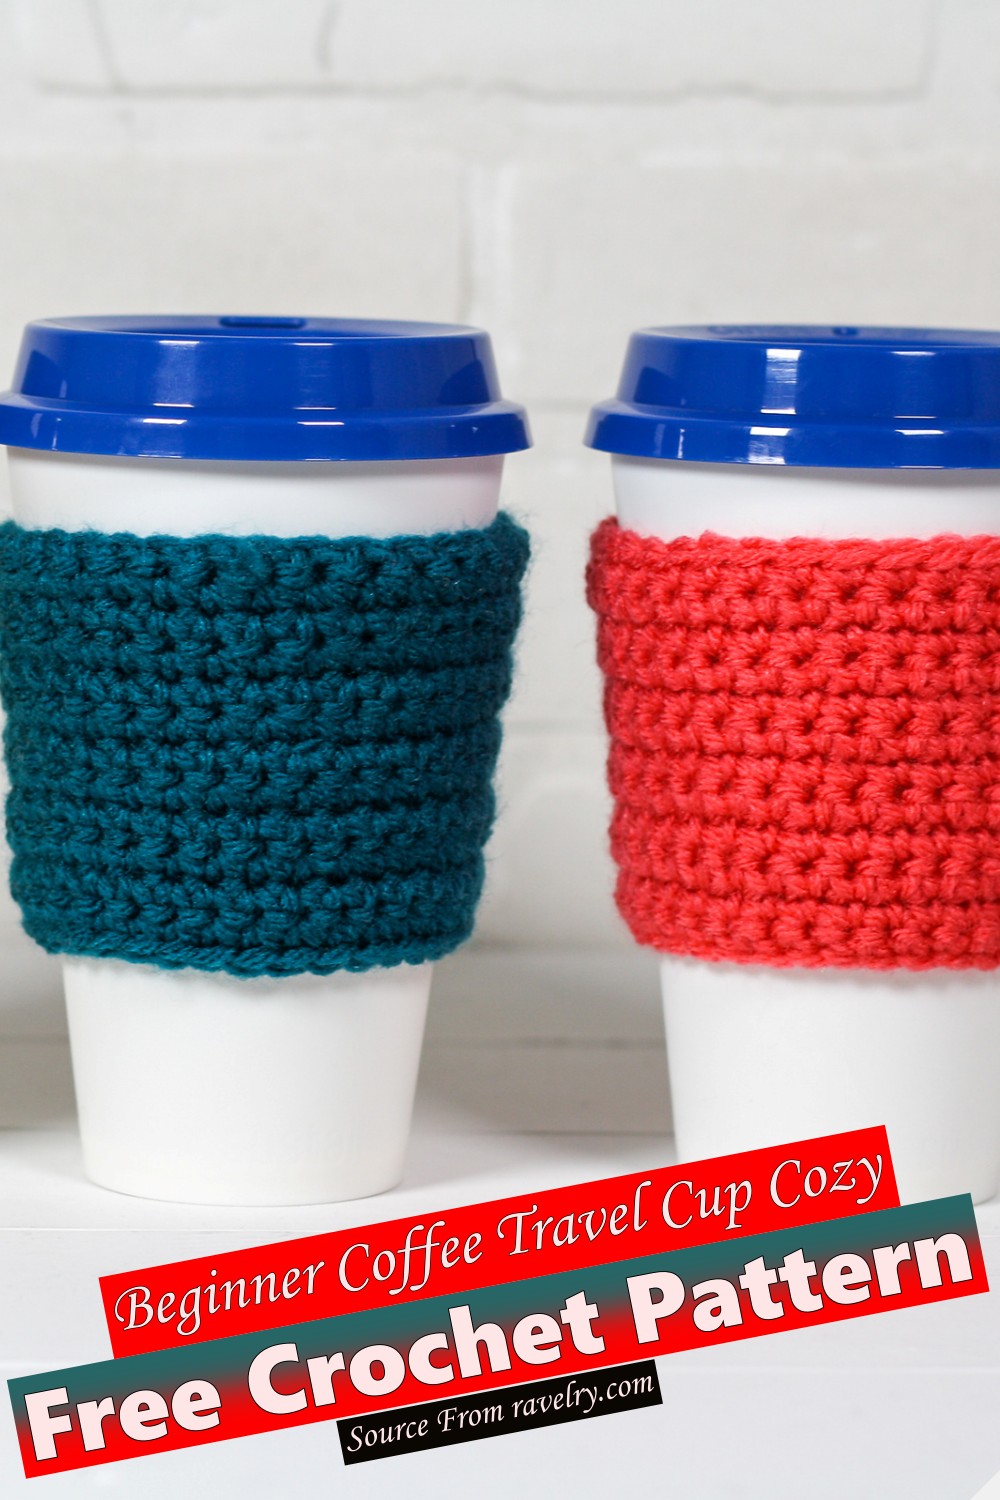 Free Crochet Beginner Coffee Travel Cup Cozy Pattern